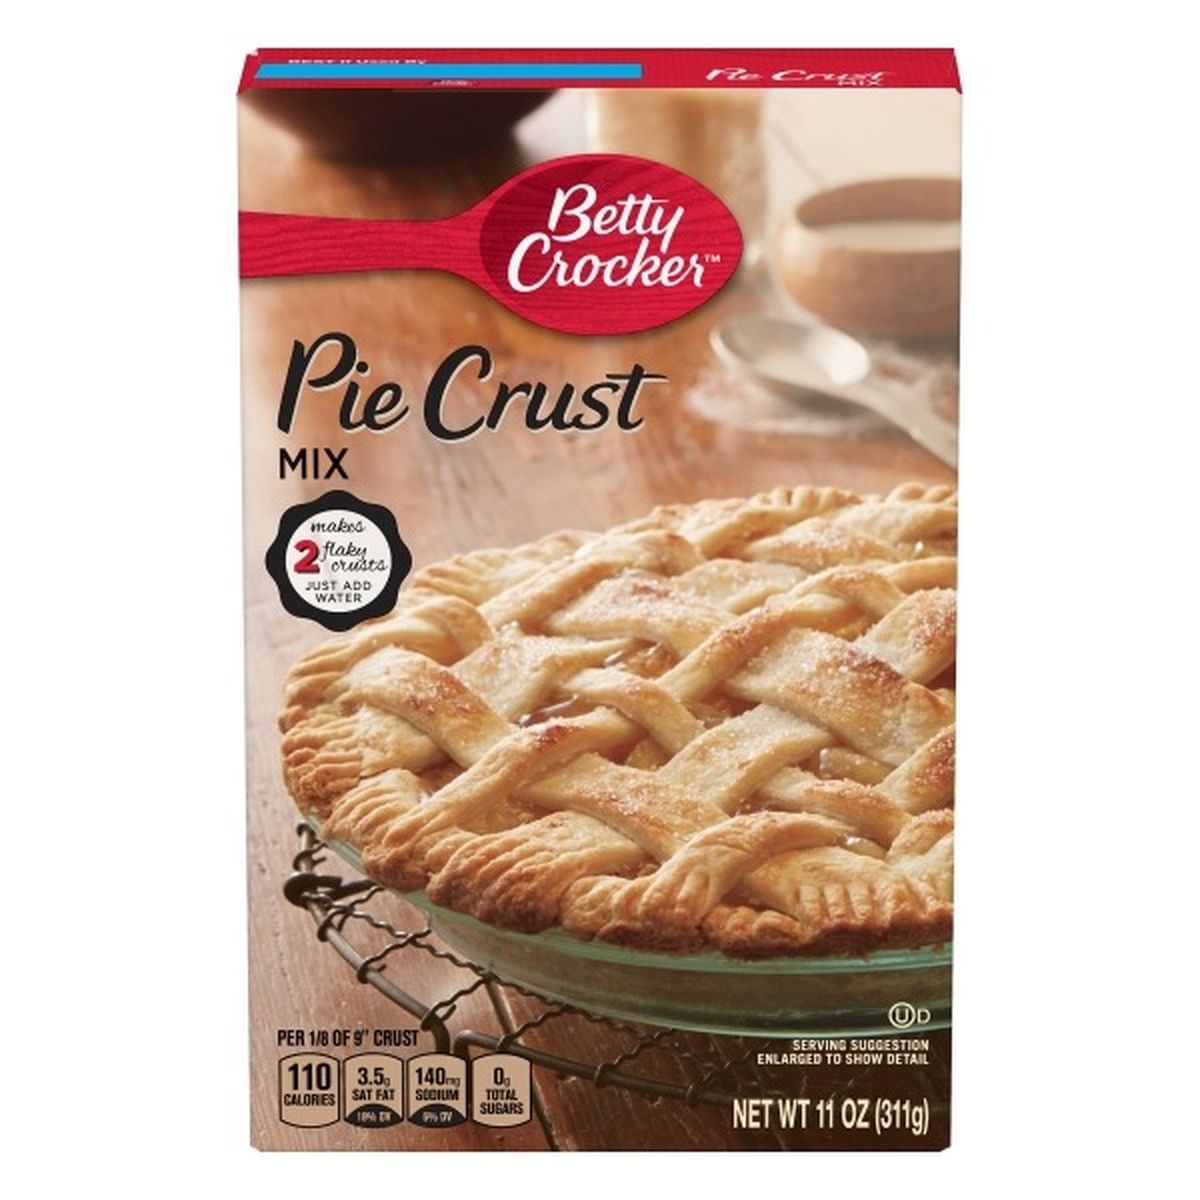 Calories in Betty Crocker Pie Crust Mix